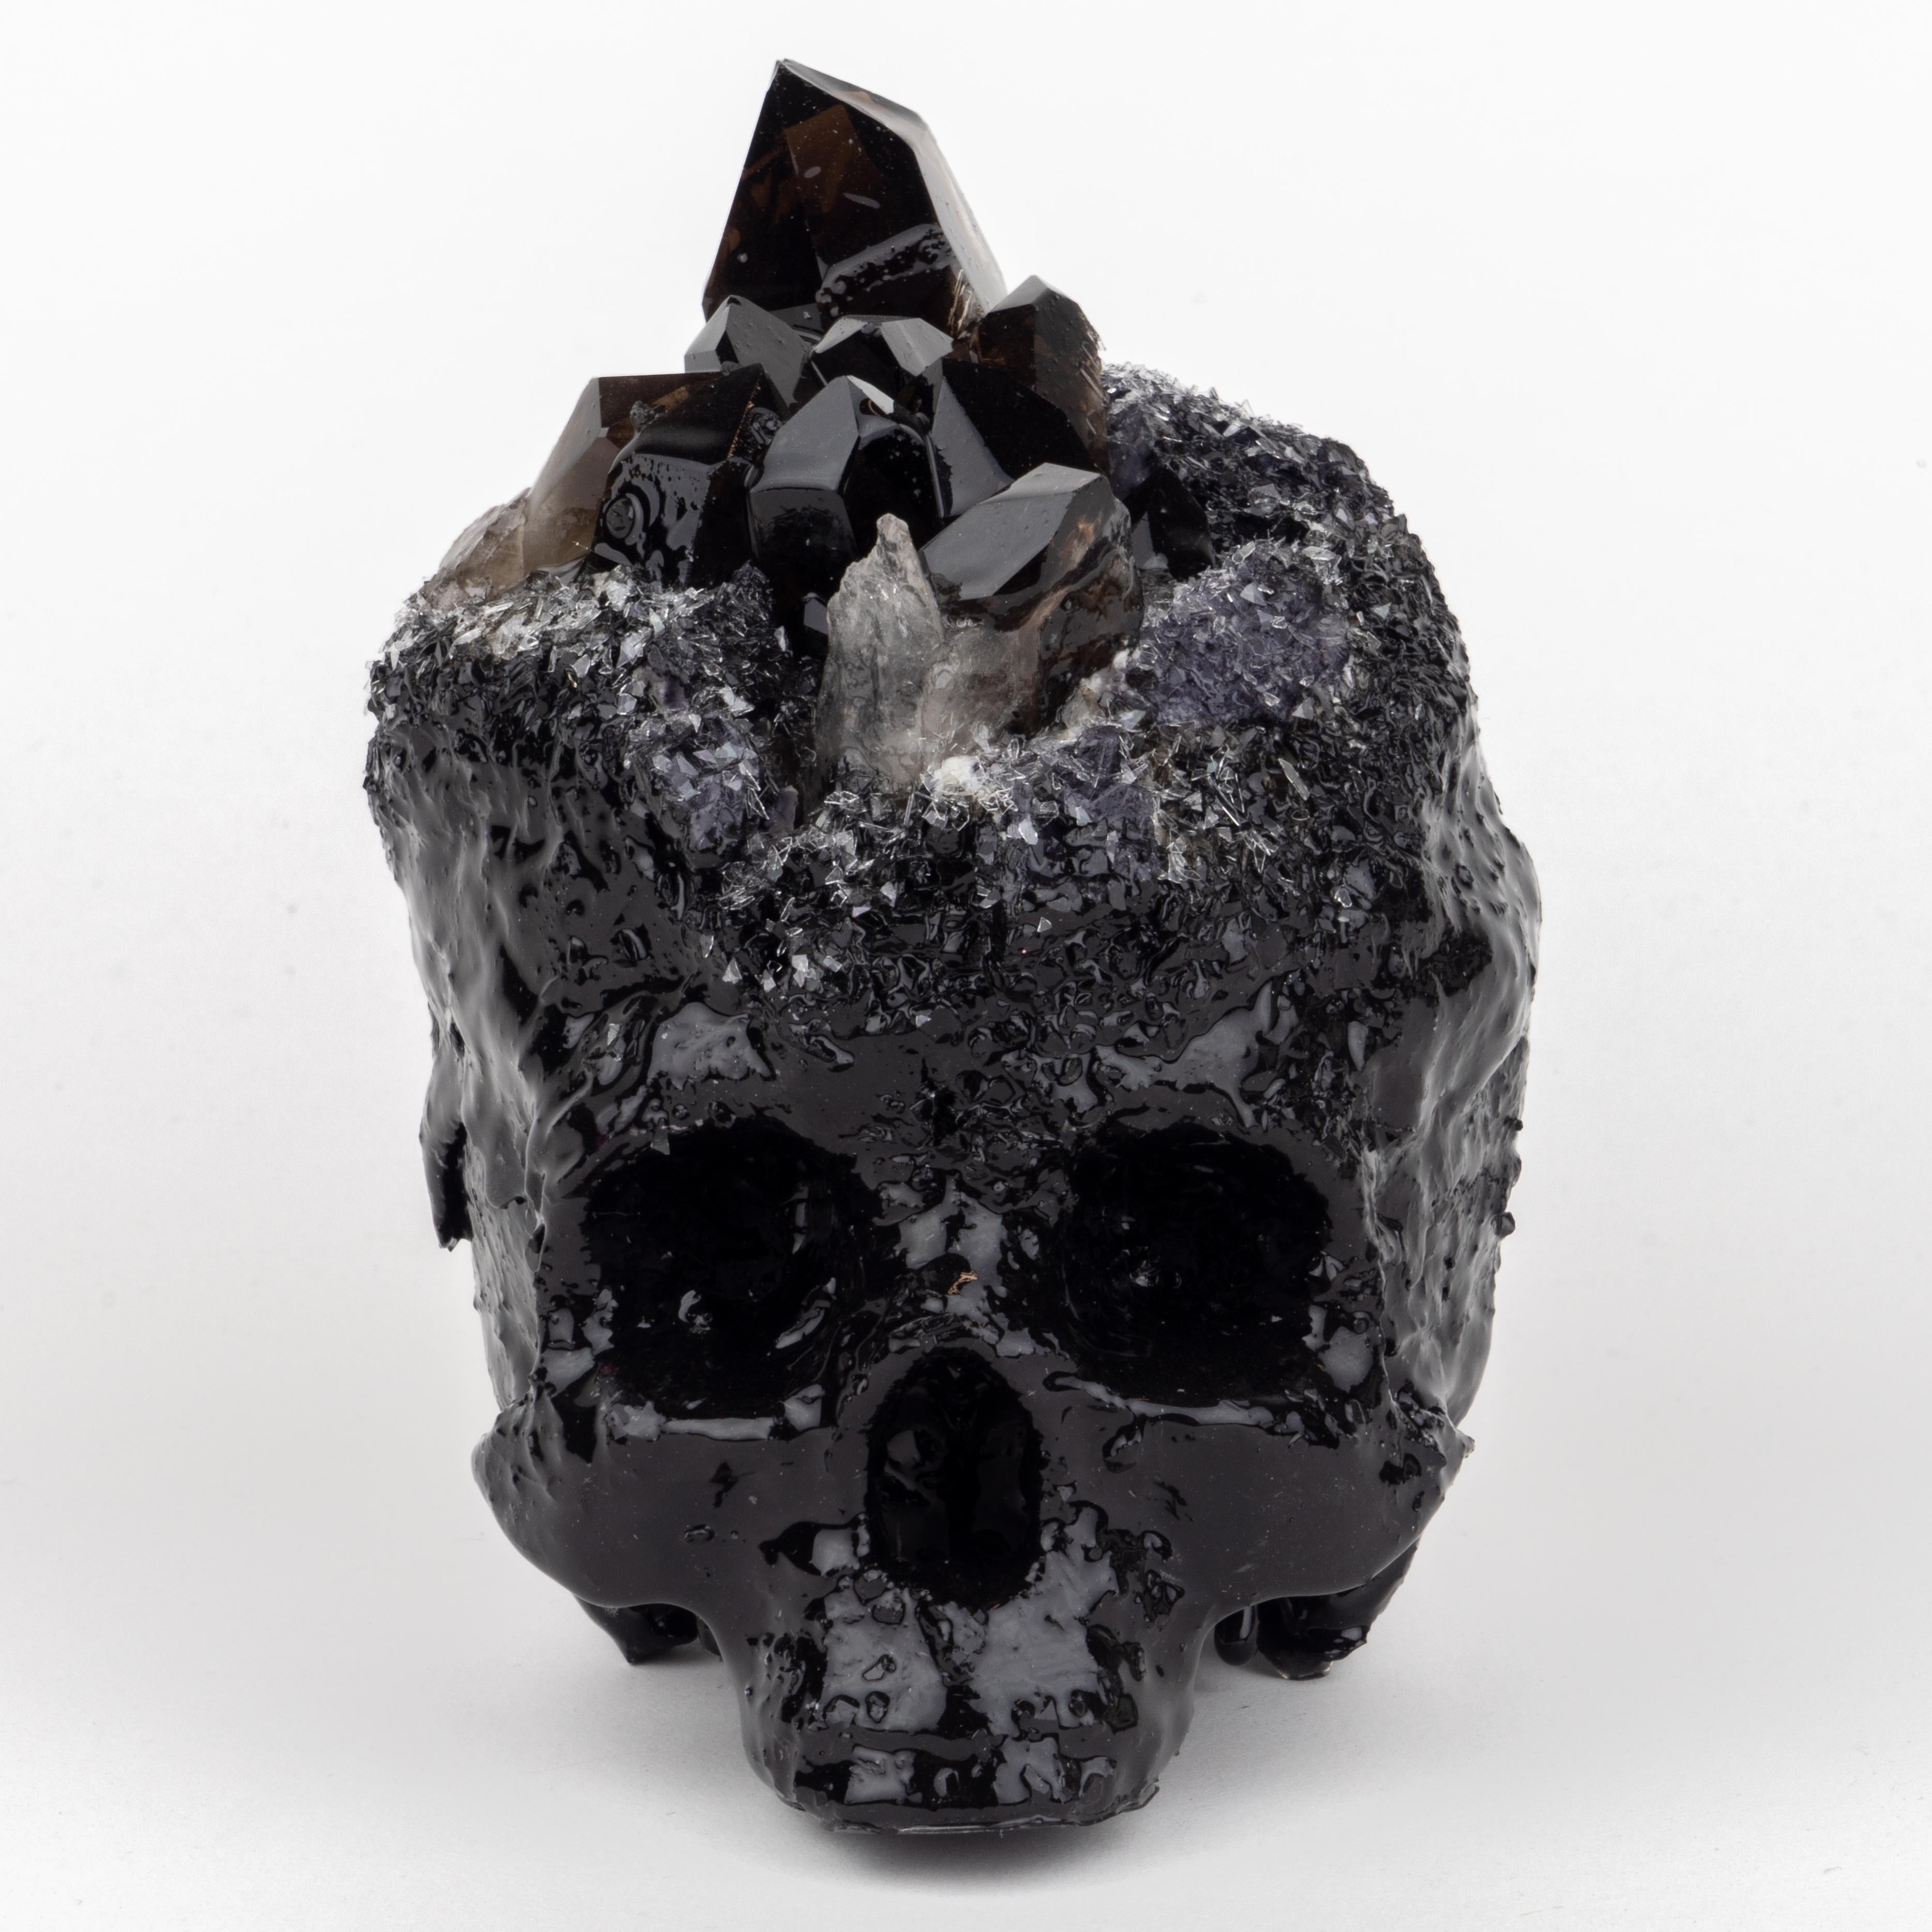 Sarah Raskey Figurative Sculpture - Smoky Crystal Skull Sculpture